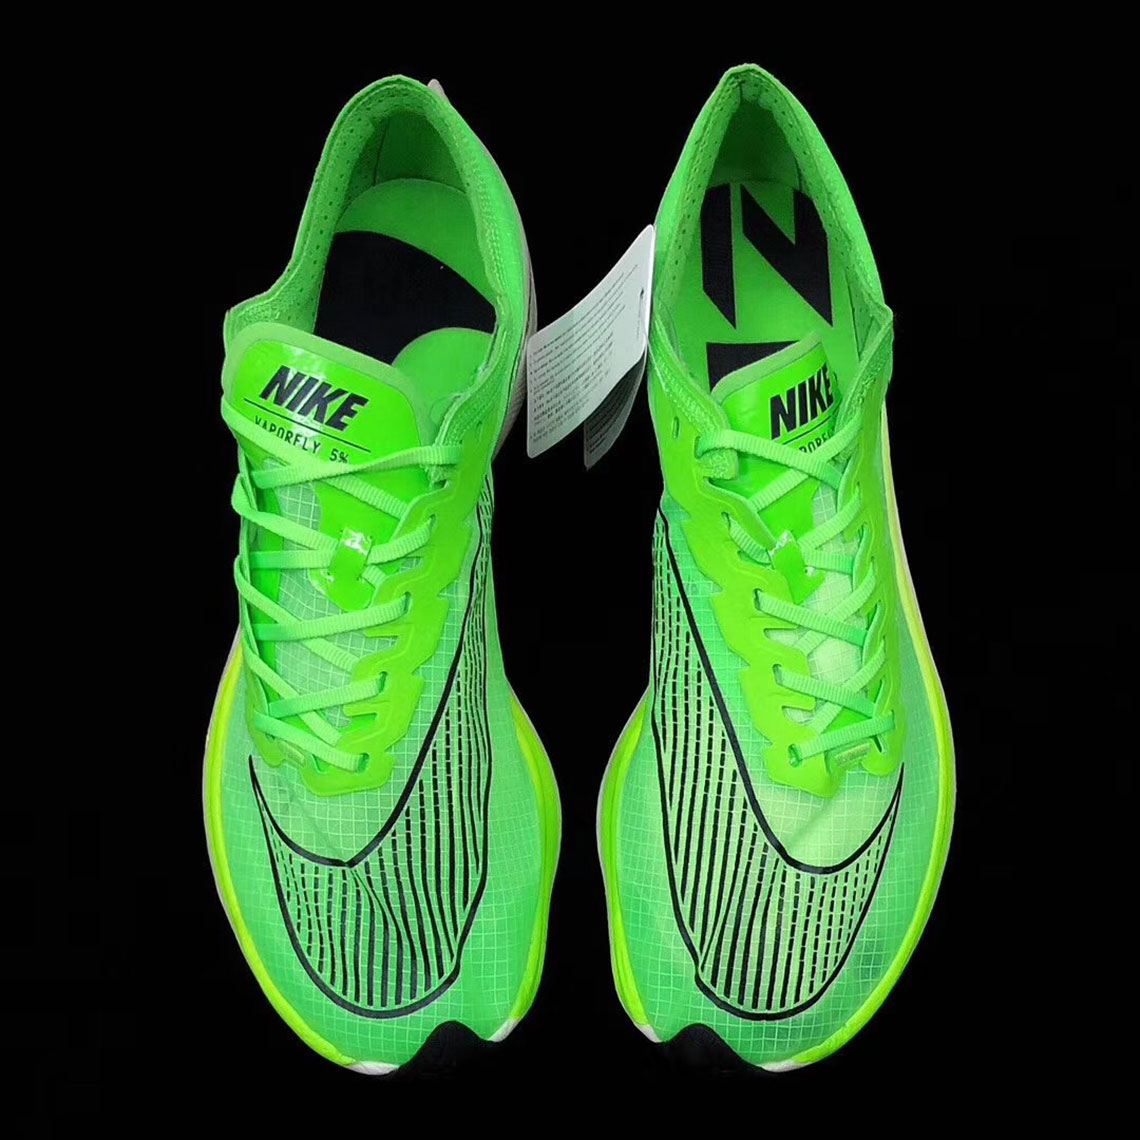 Nike Zoom Vaporfly 5% Volt White University Red Release Info |  SneakerNews.com